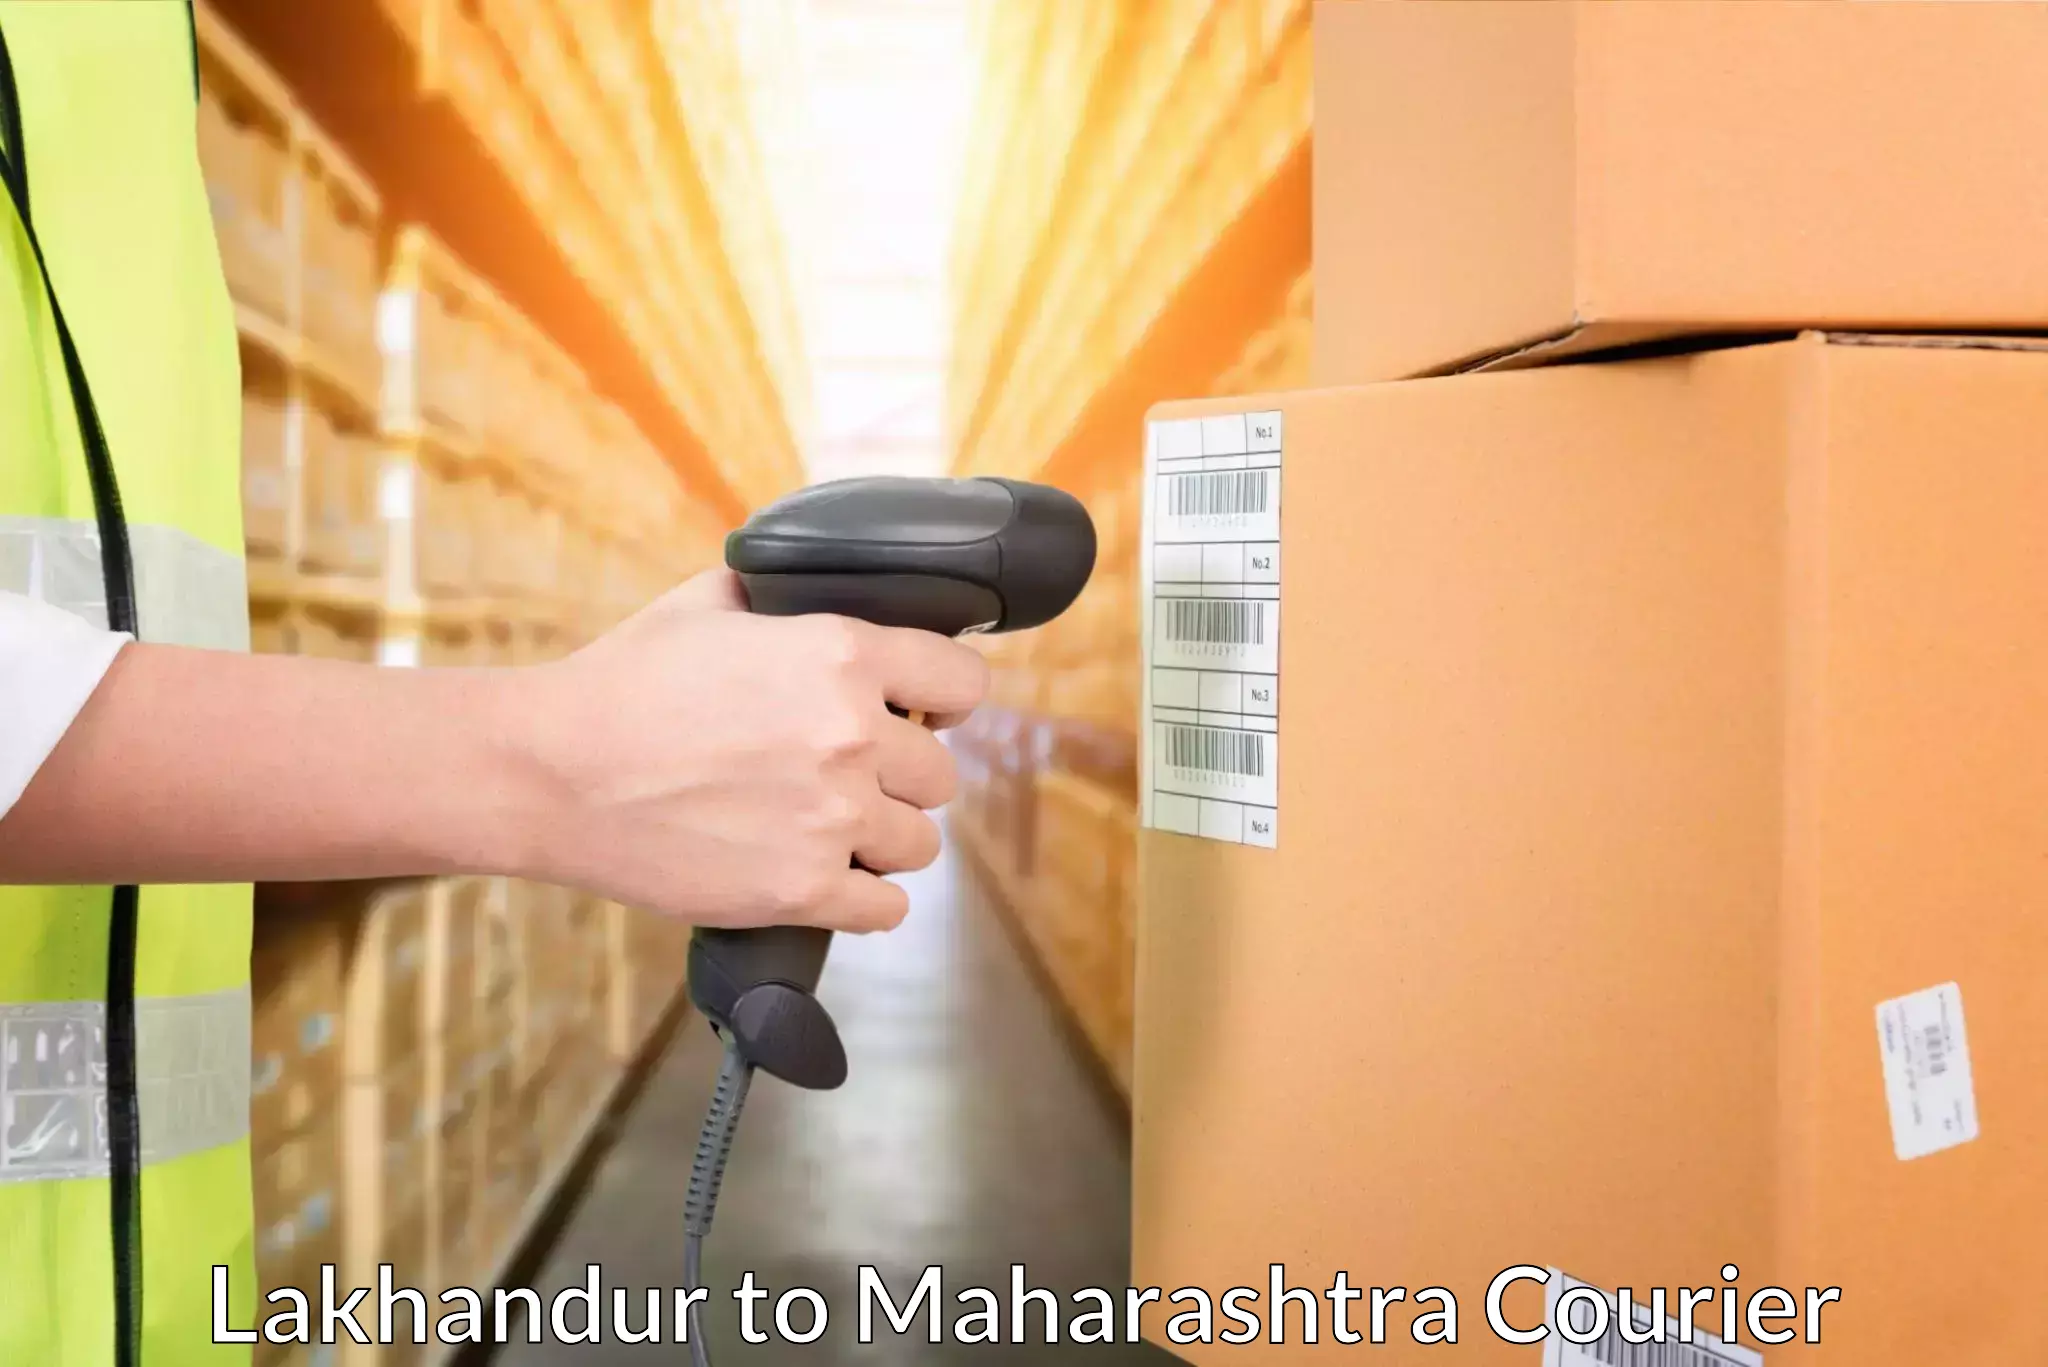 Efficient order fulfillment Lakhandur to Buldhana